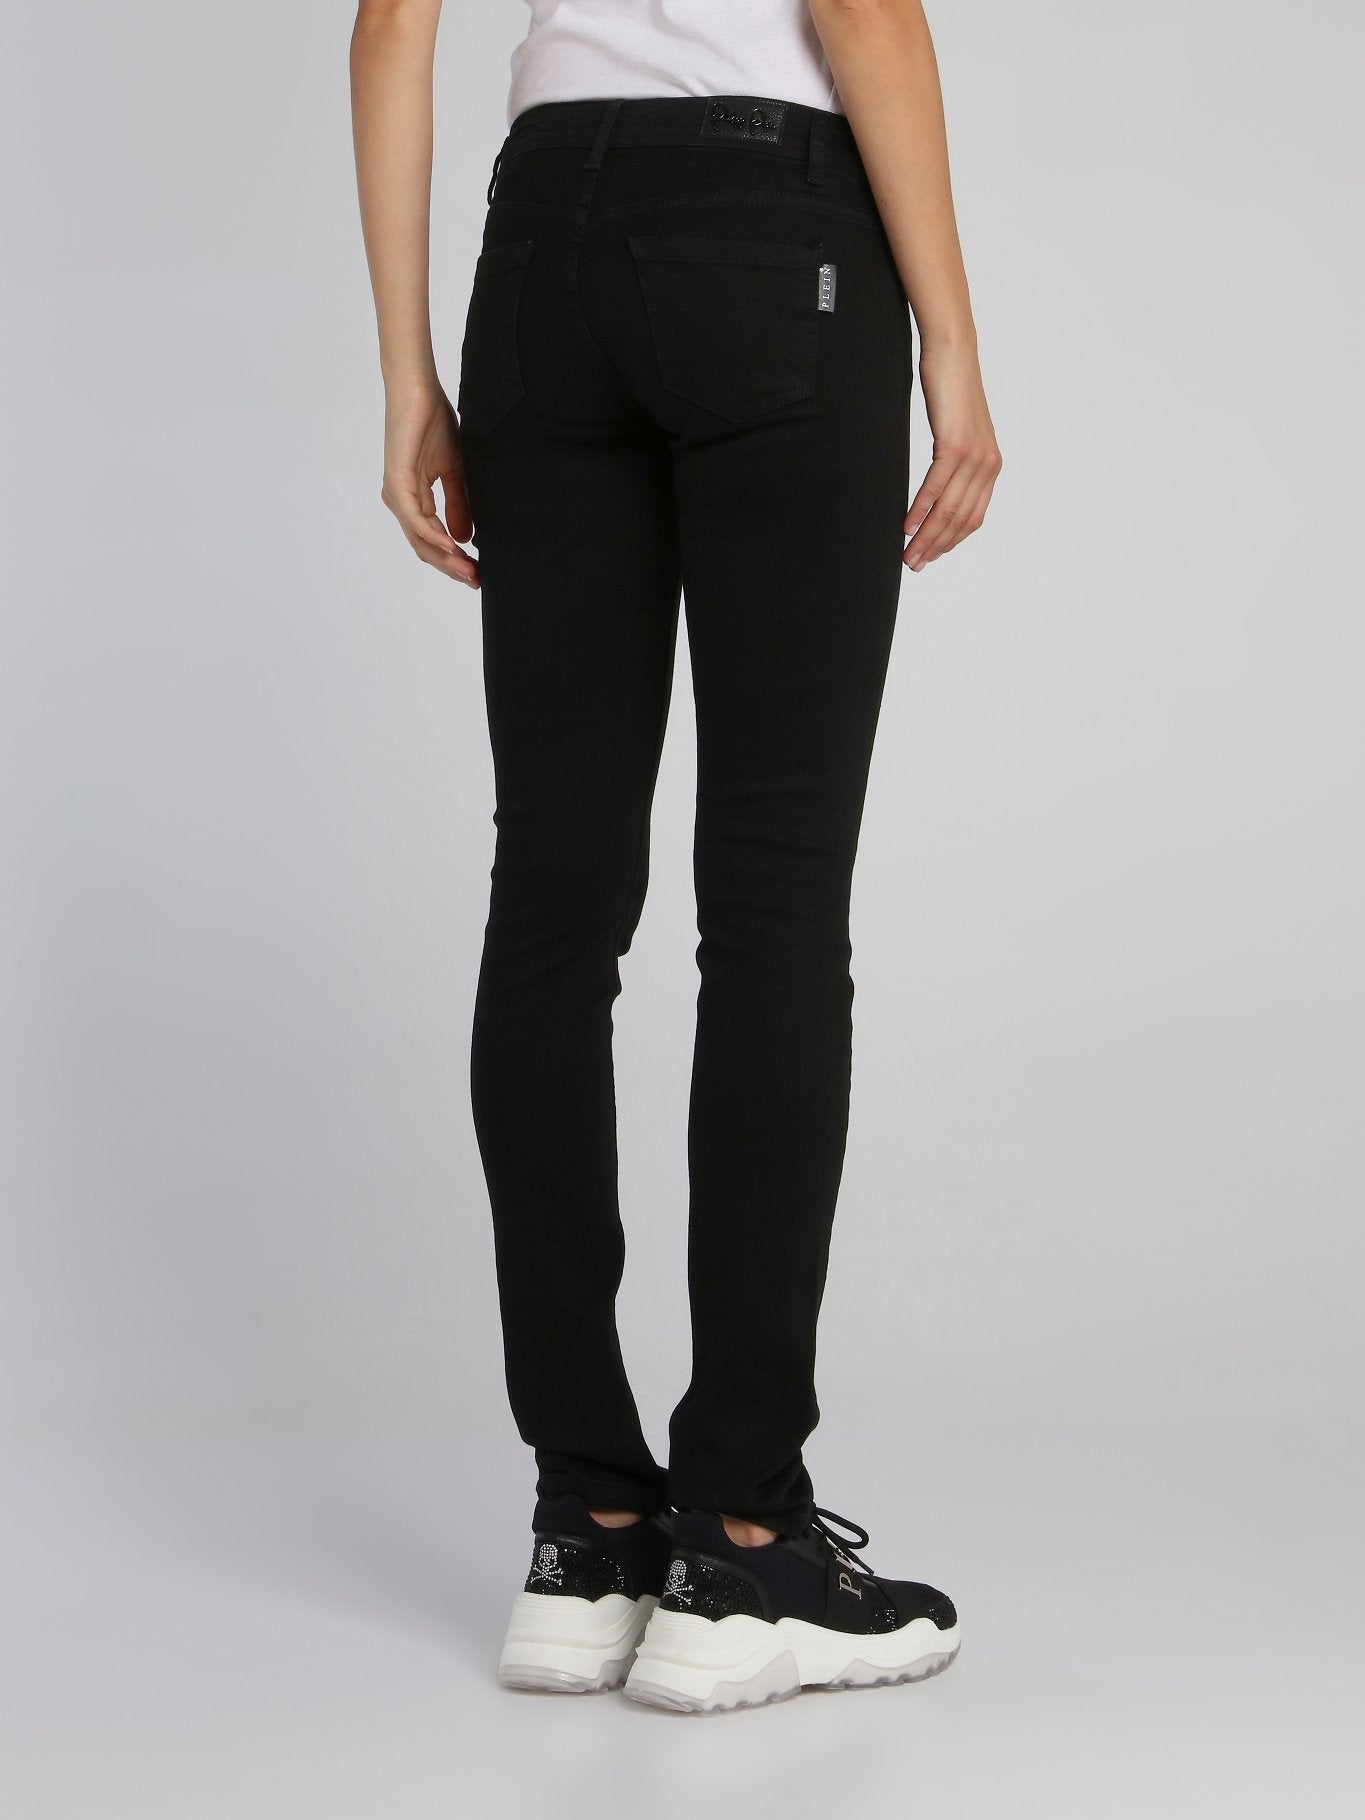 Black Super Skinny Jeans